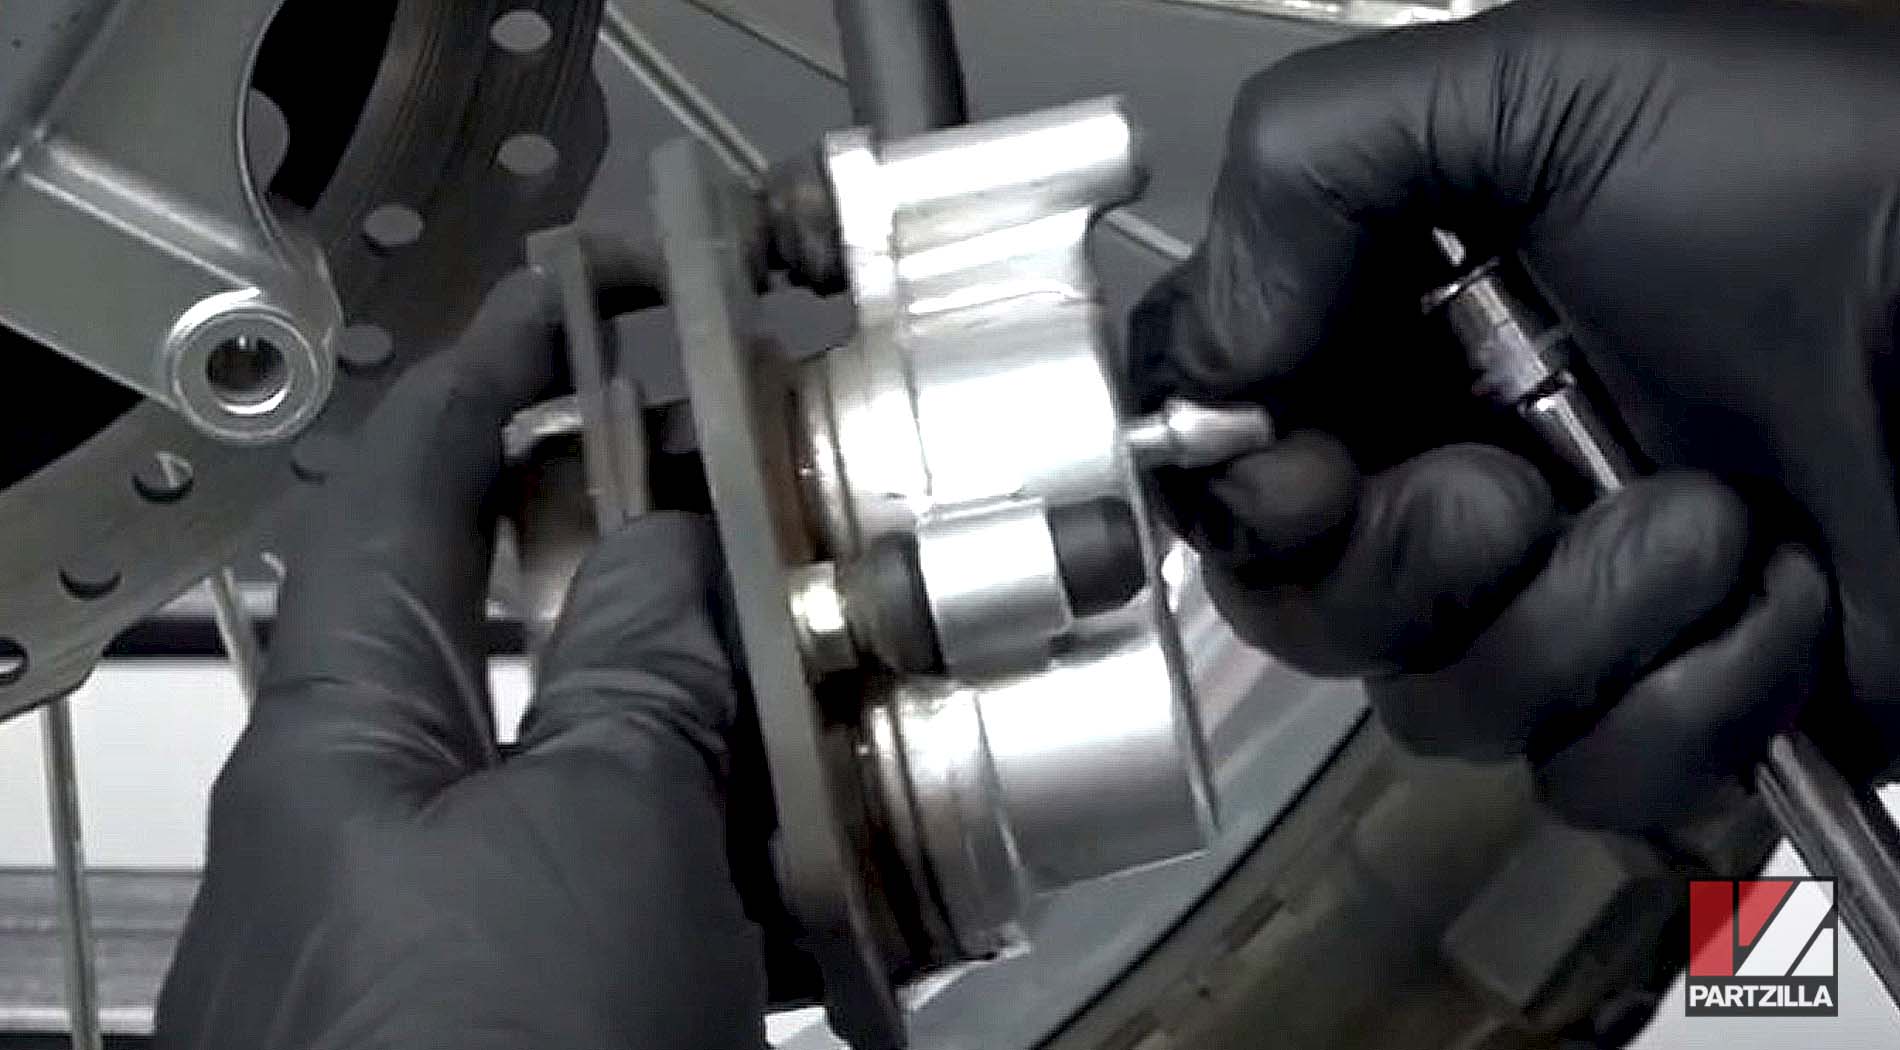 How to replace Kawasaki KLR650 motorcycle front brake pads